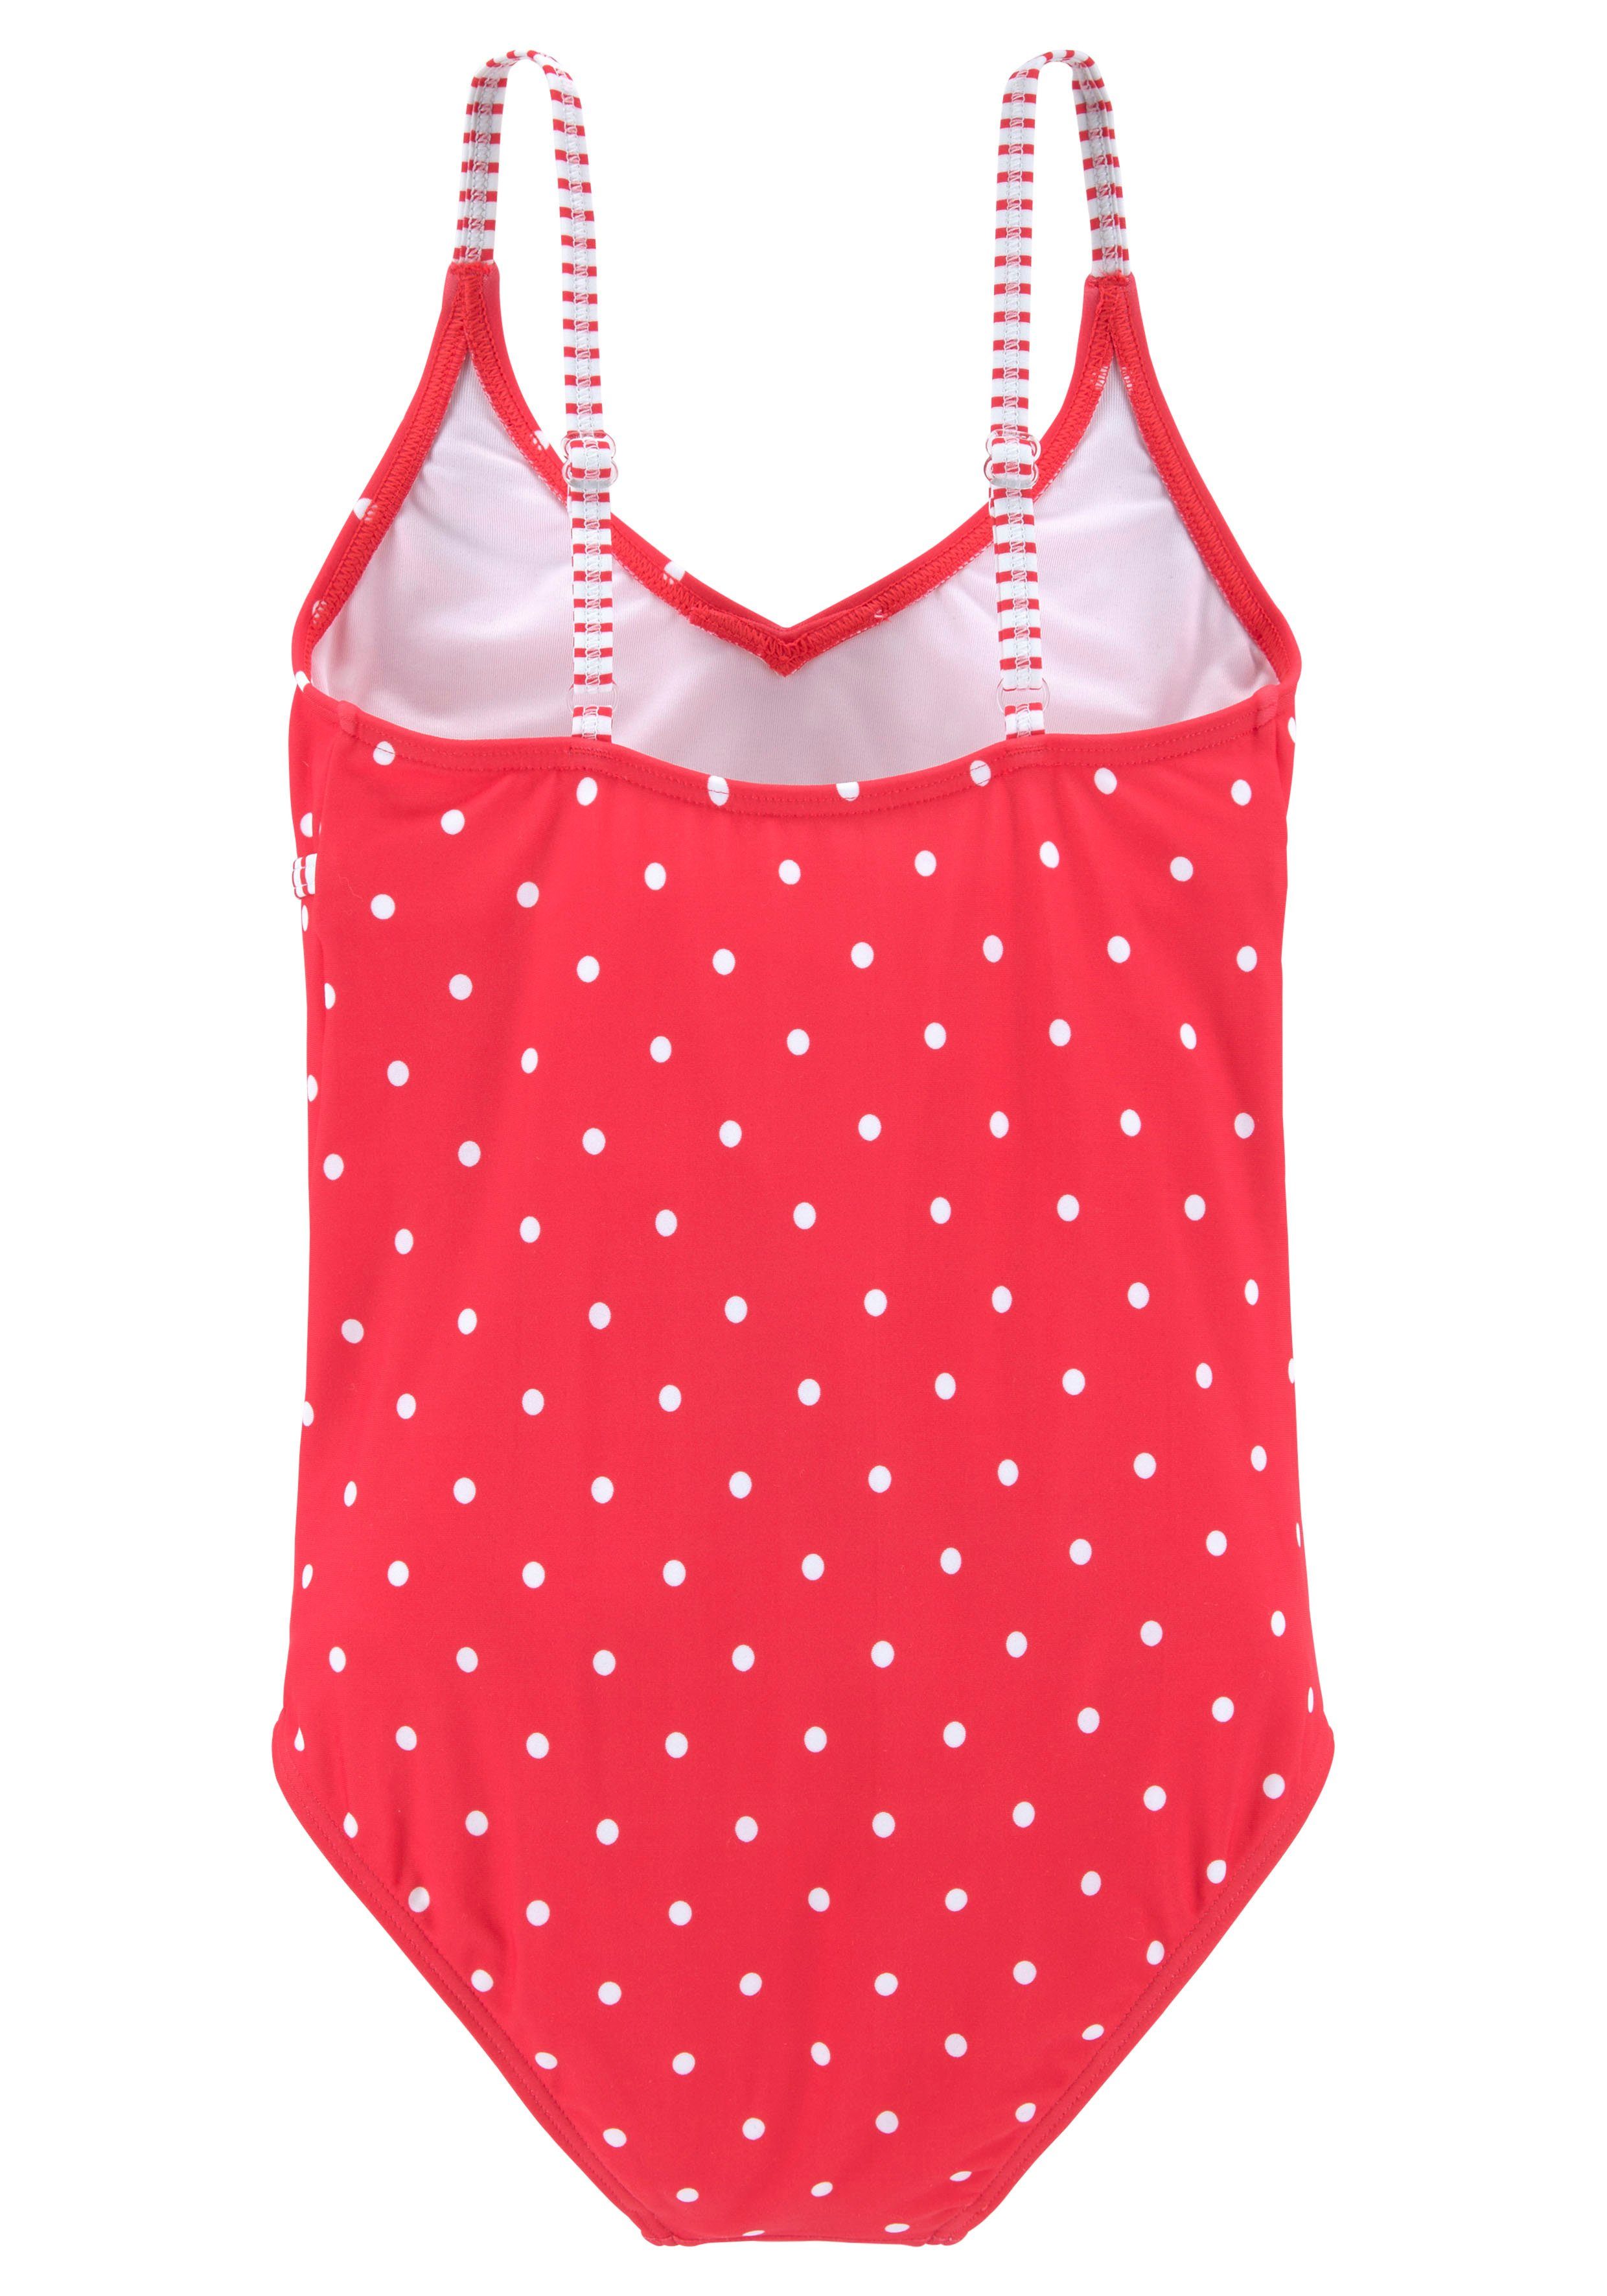 s.oliver red label beachwear badpak audrey kids in stippen-strepenmix rood